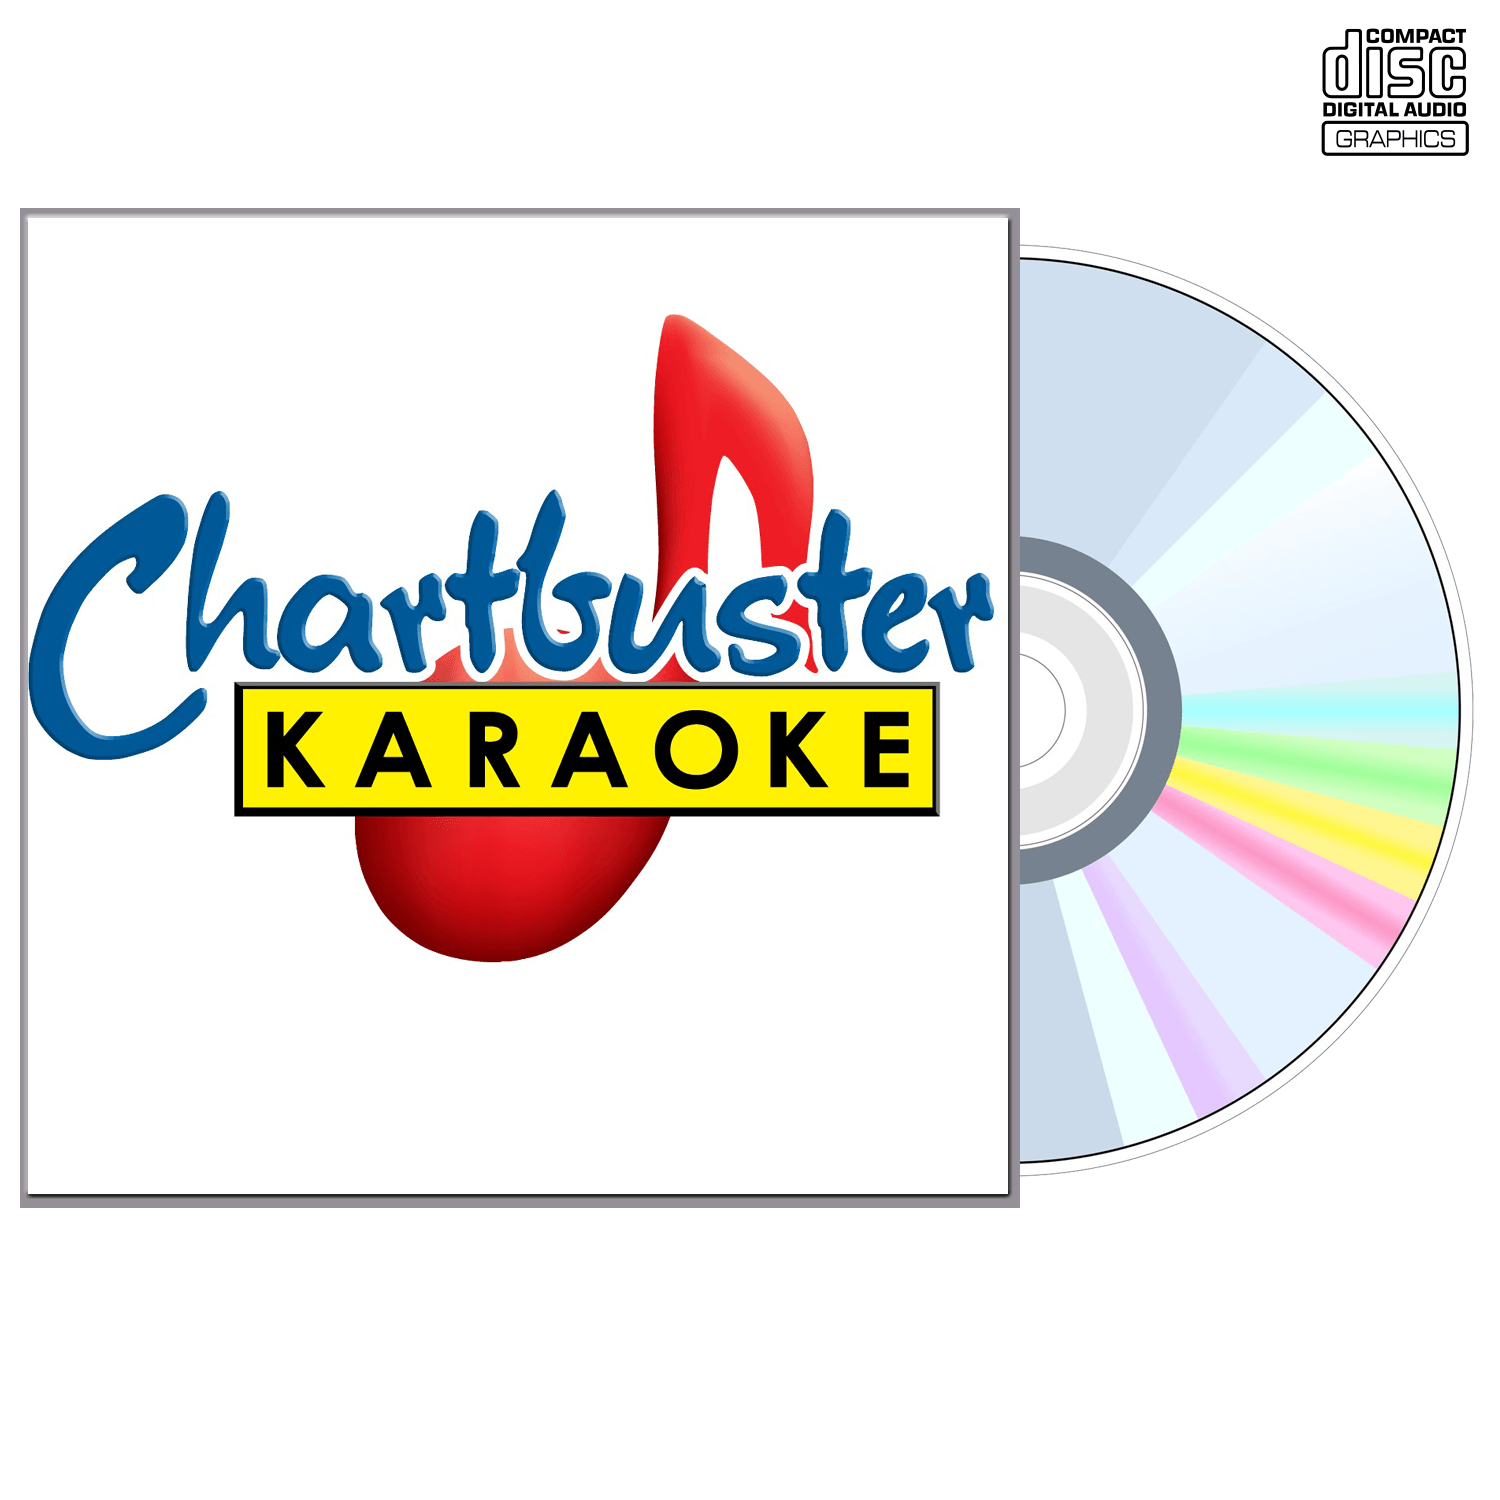 Travis Tritt Vol 2 - CD+G - Chartbuster Karaoke - Karaoke Home Entertainment